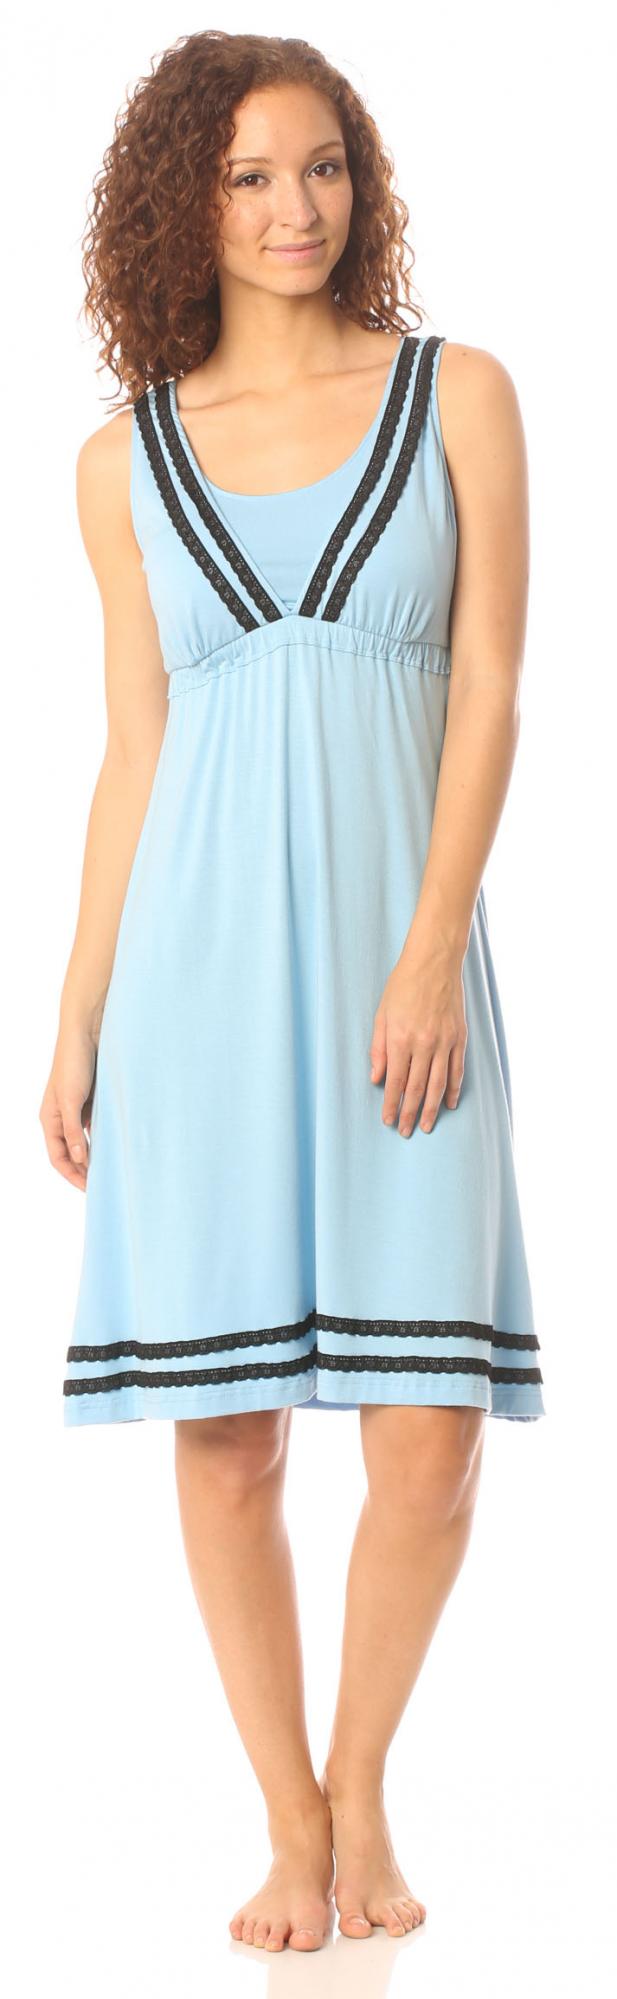 Nursing Gown / Dress